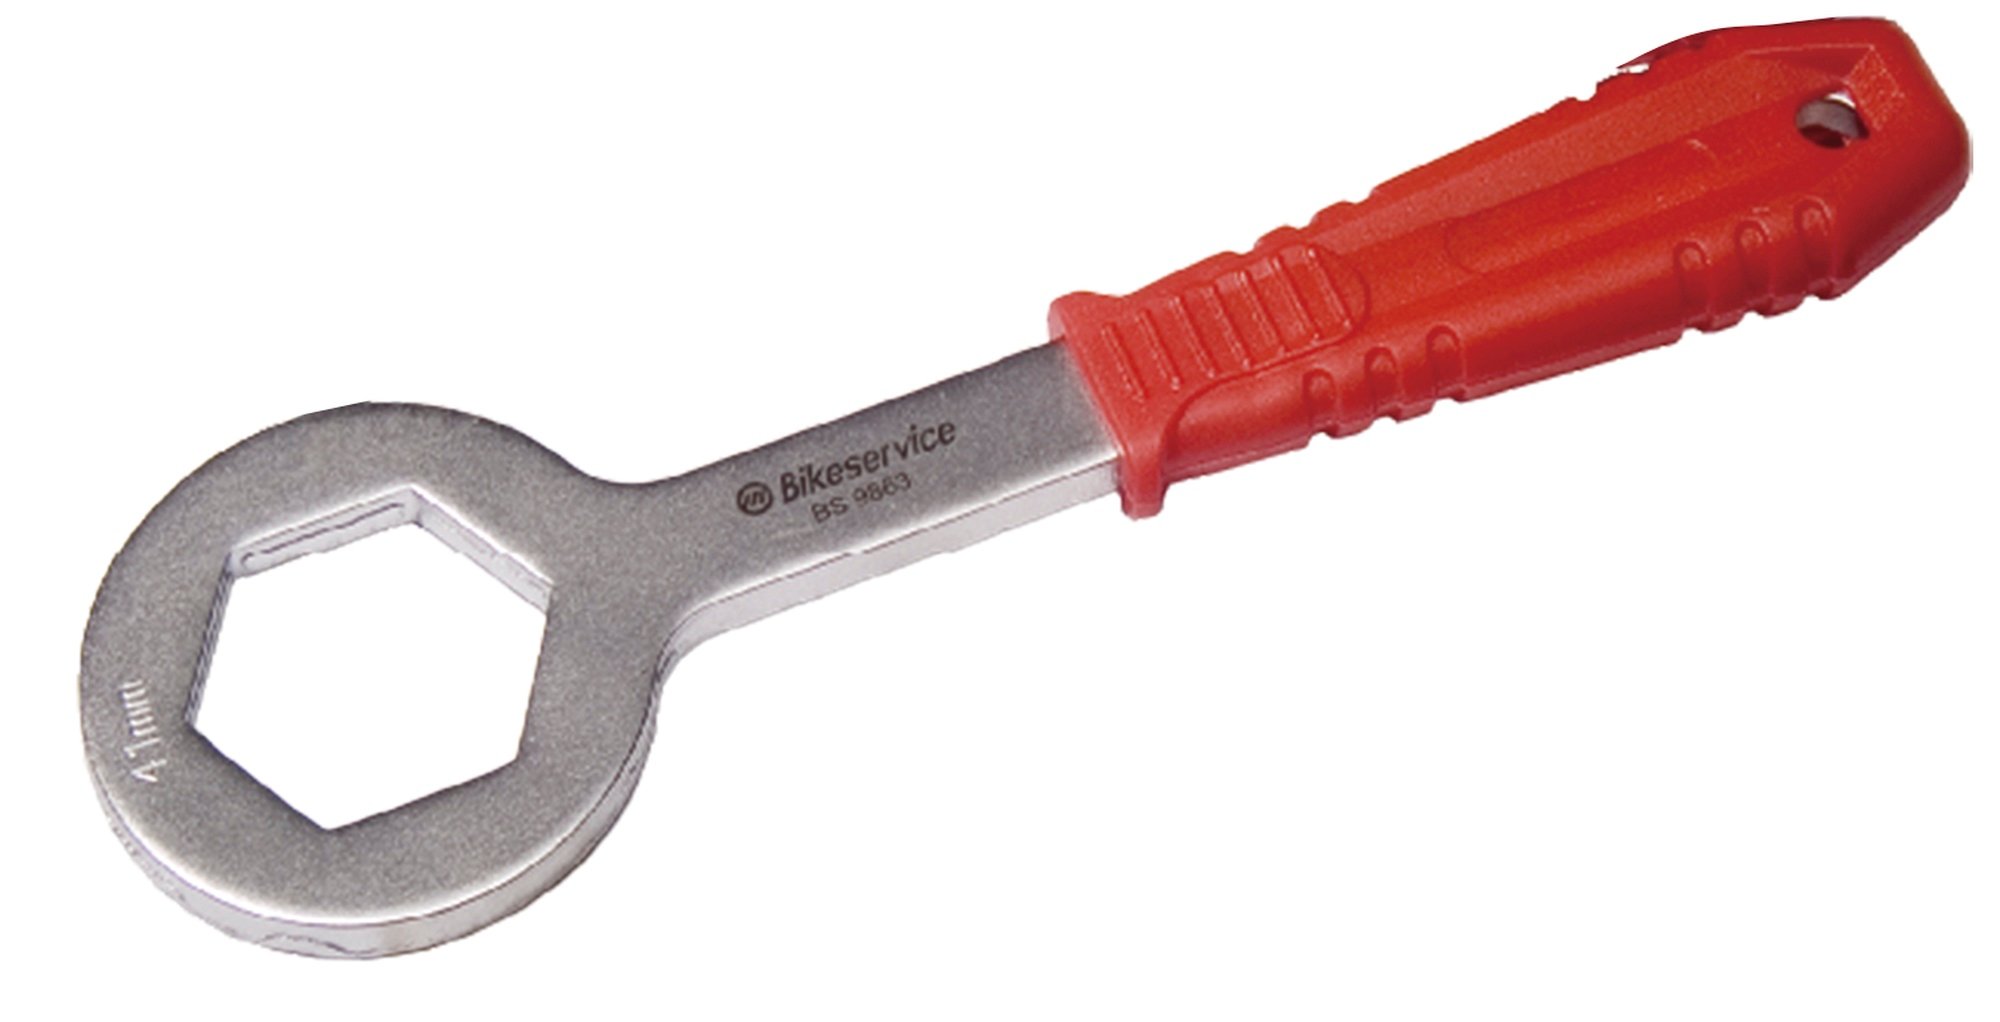 Obrázek produktu klíč šestihranný 41 mm, BIKESERVICE BS9863